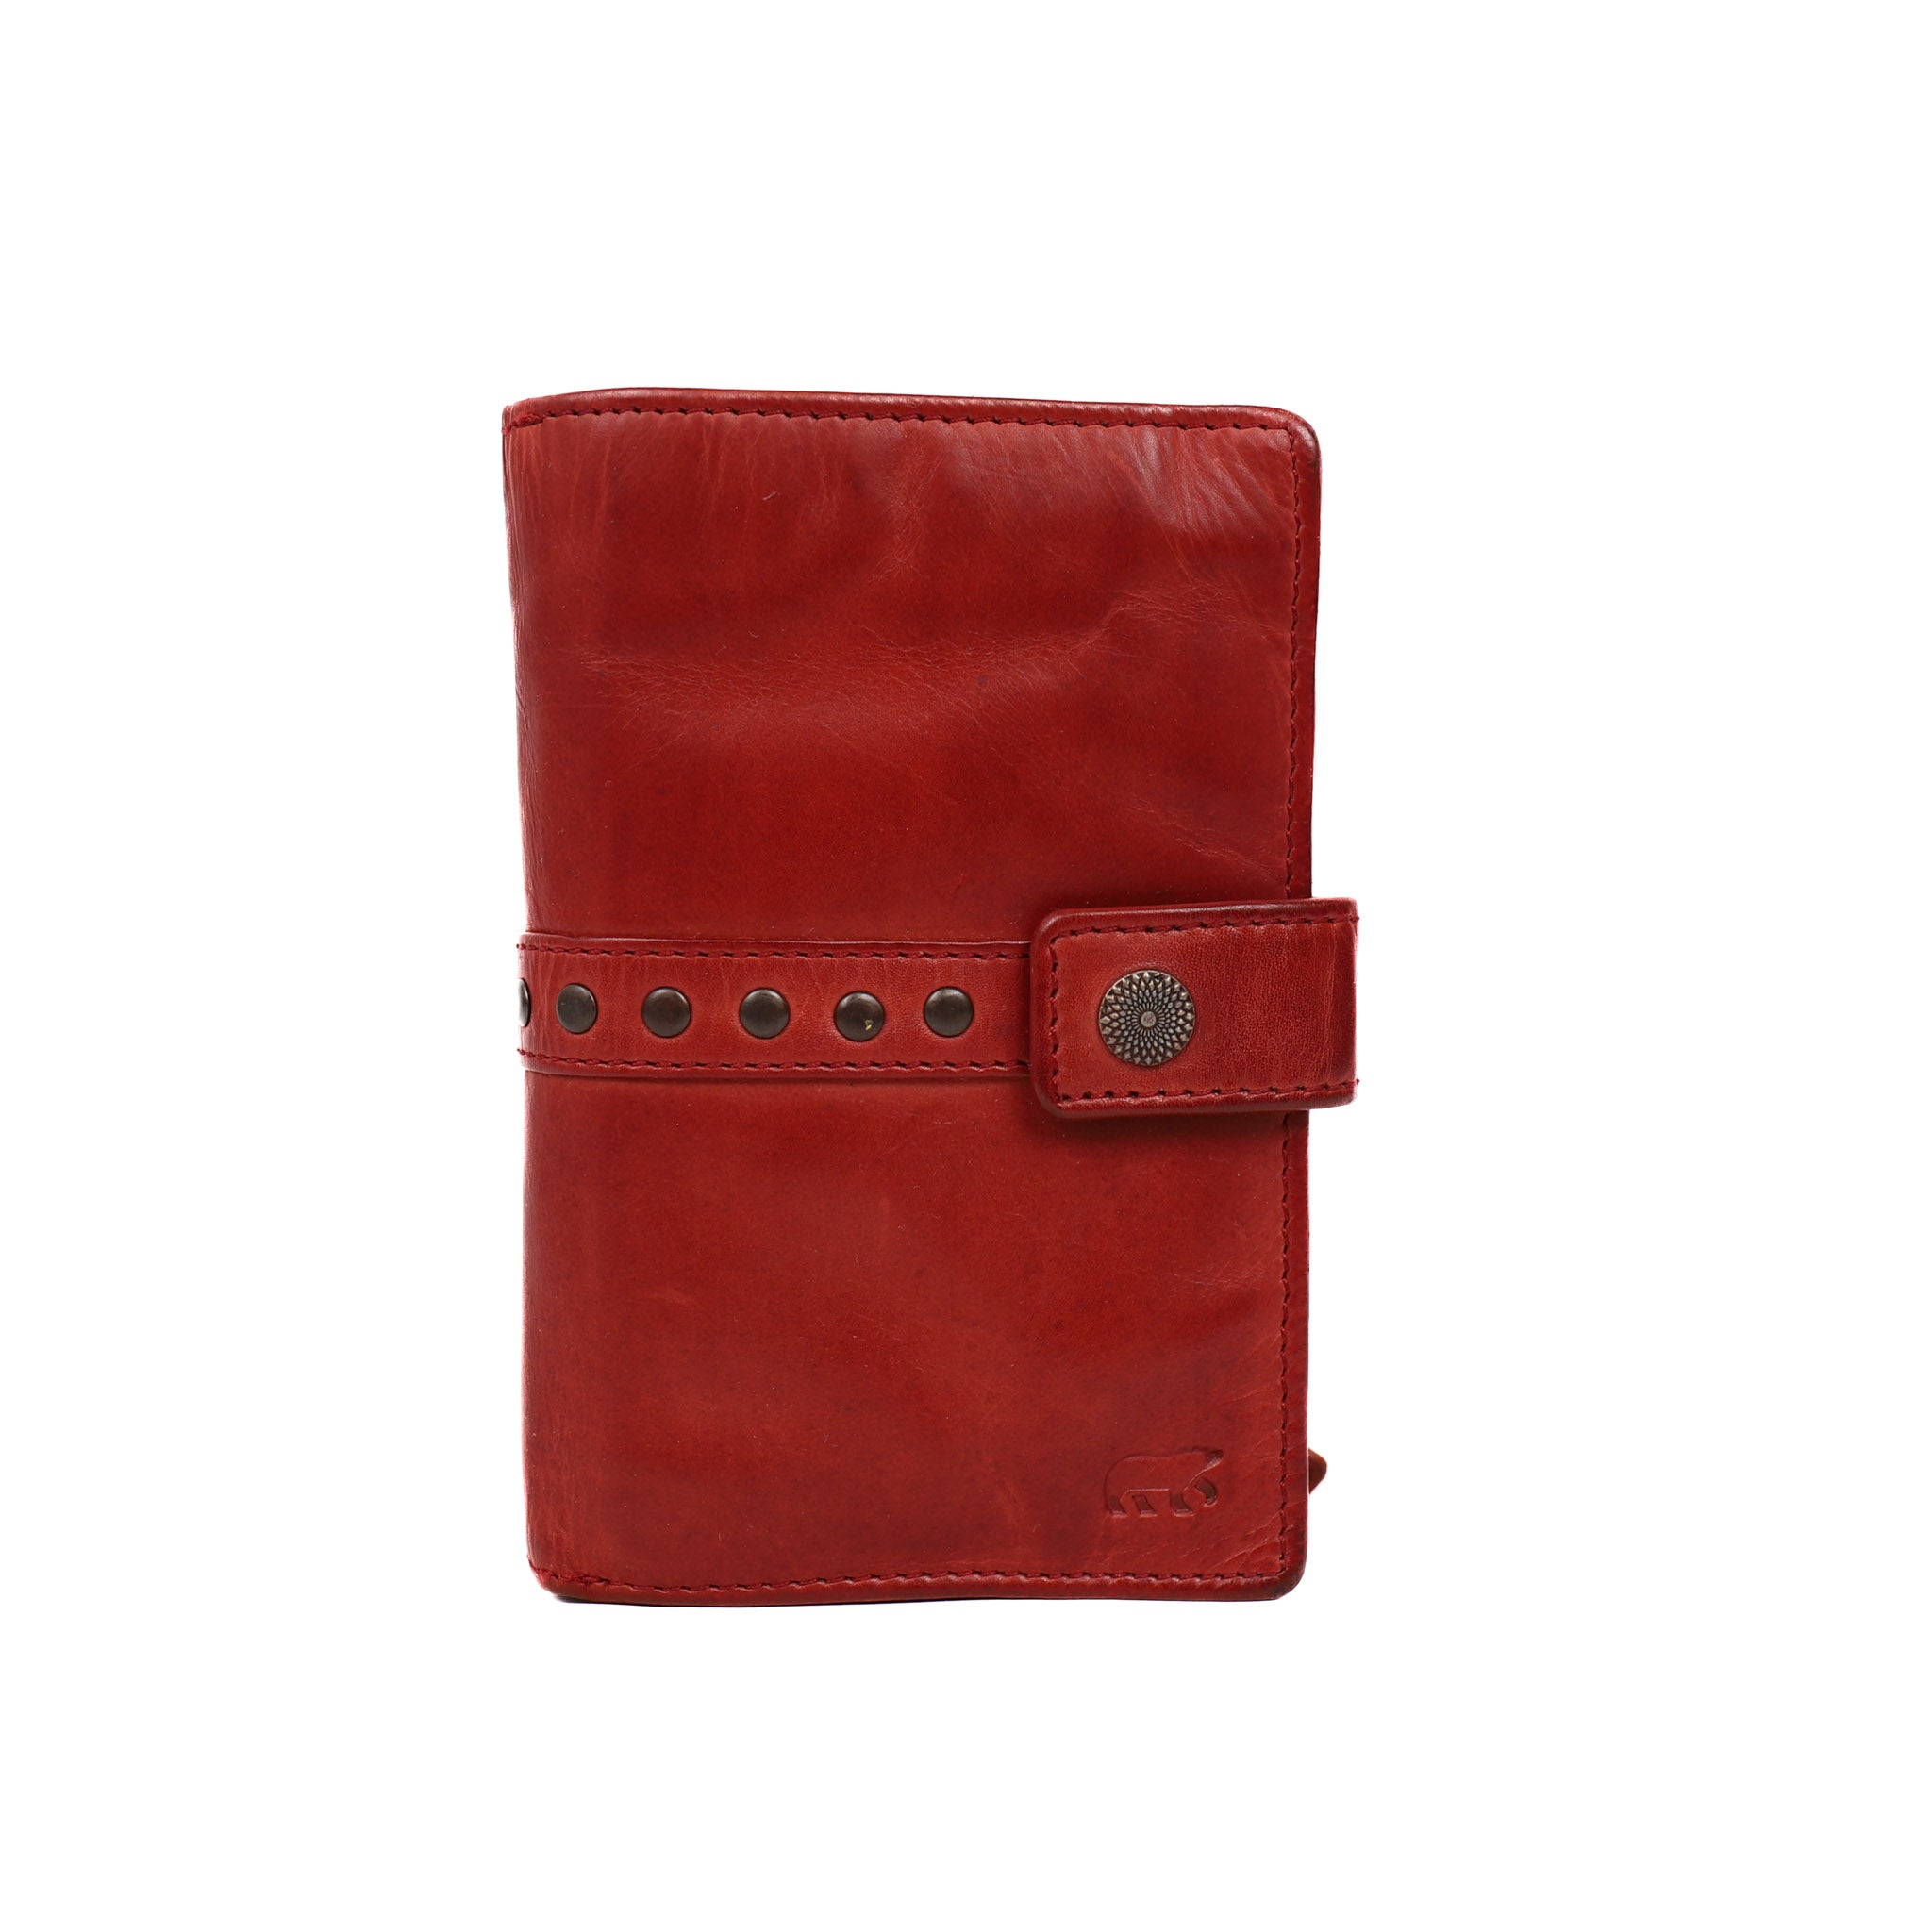 Wallet 'Sanne' red studs - CL 15087